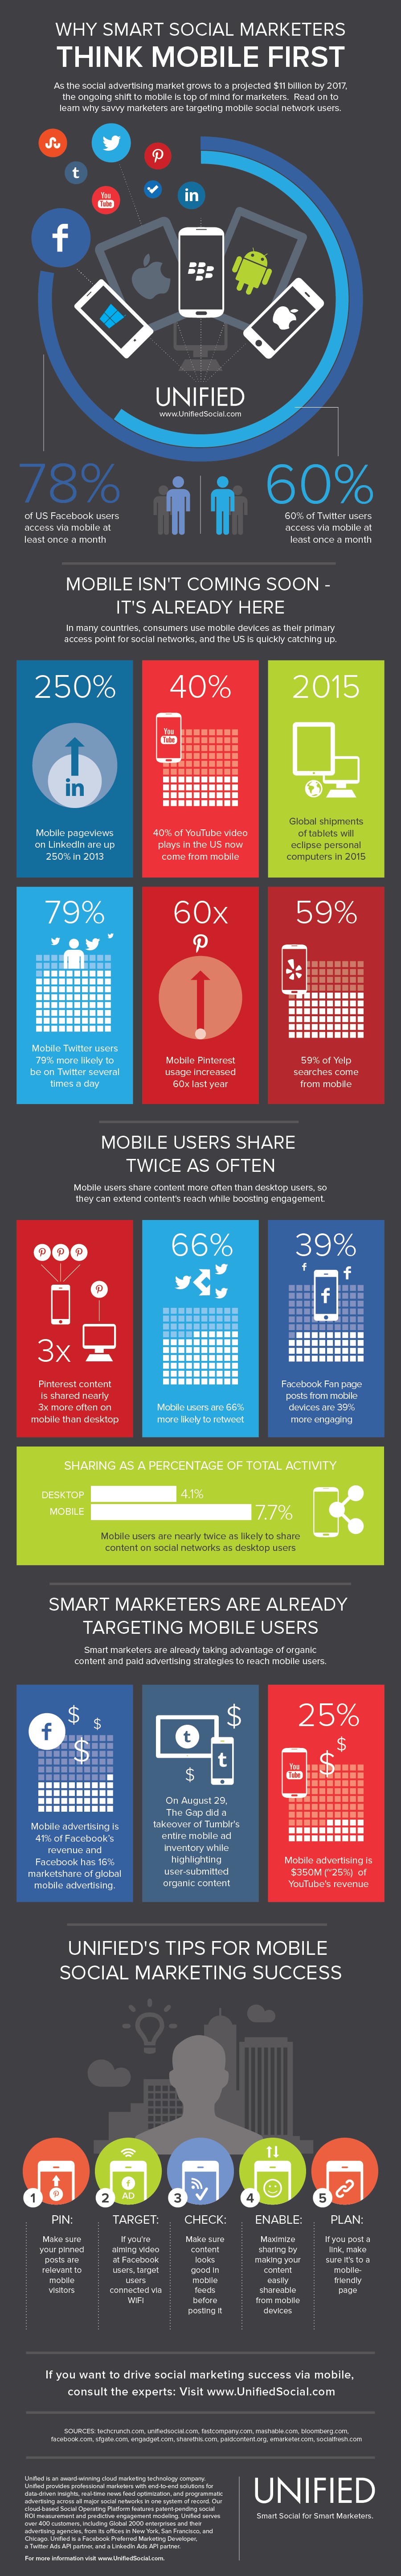 Social Networking through Mobiles